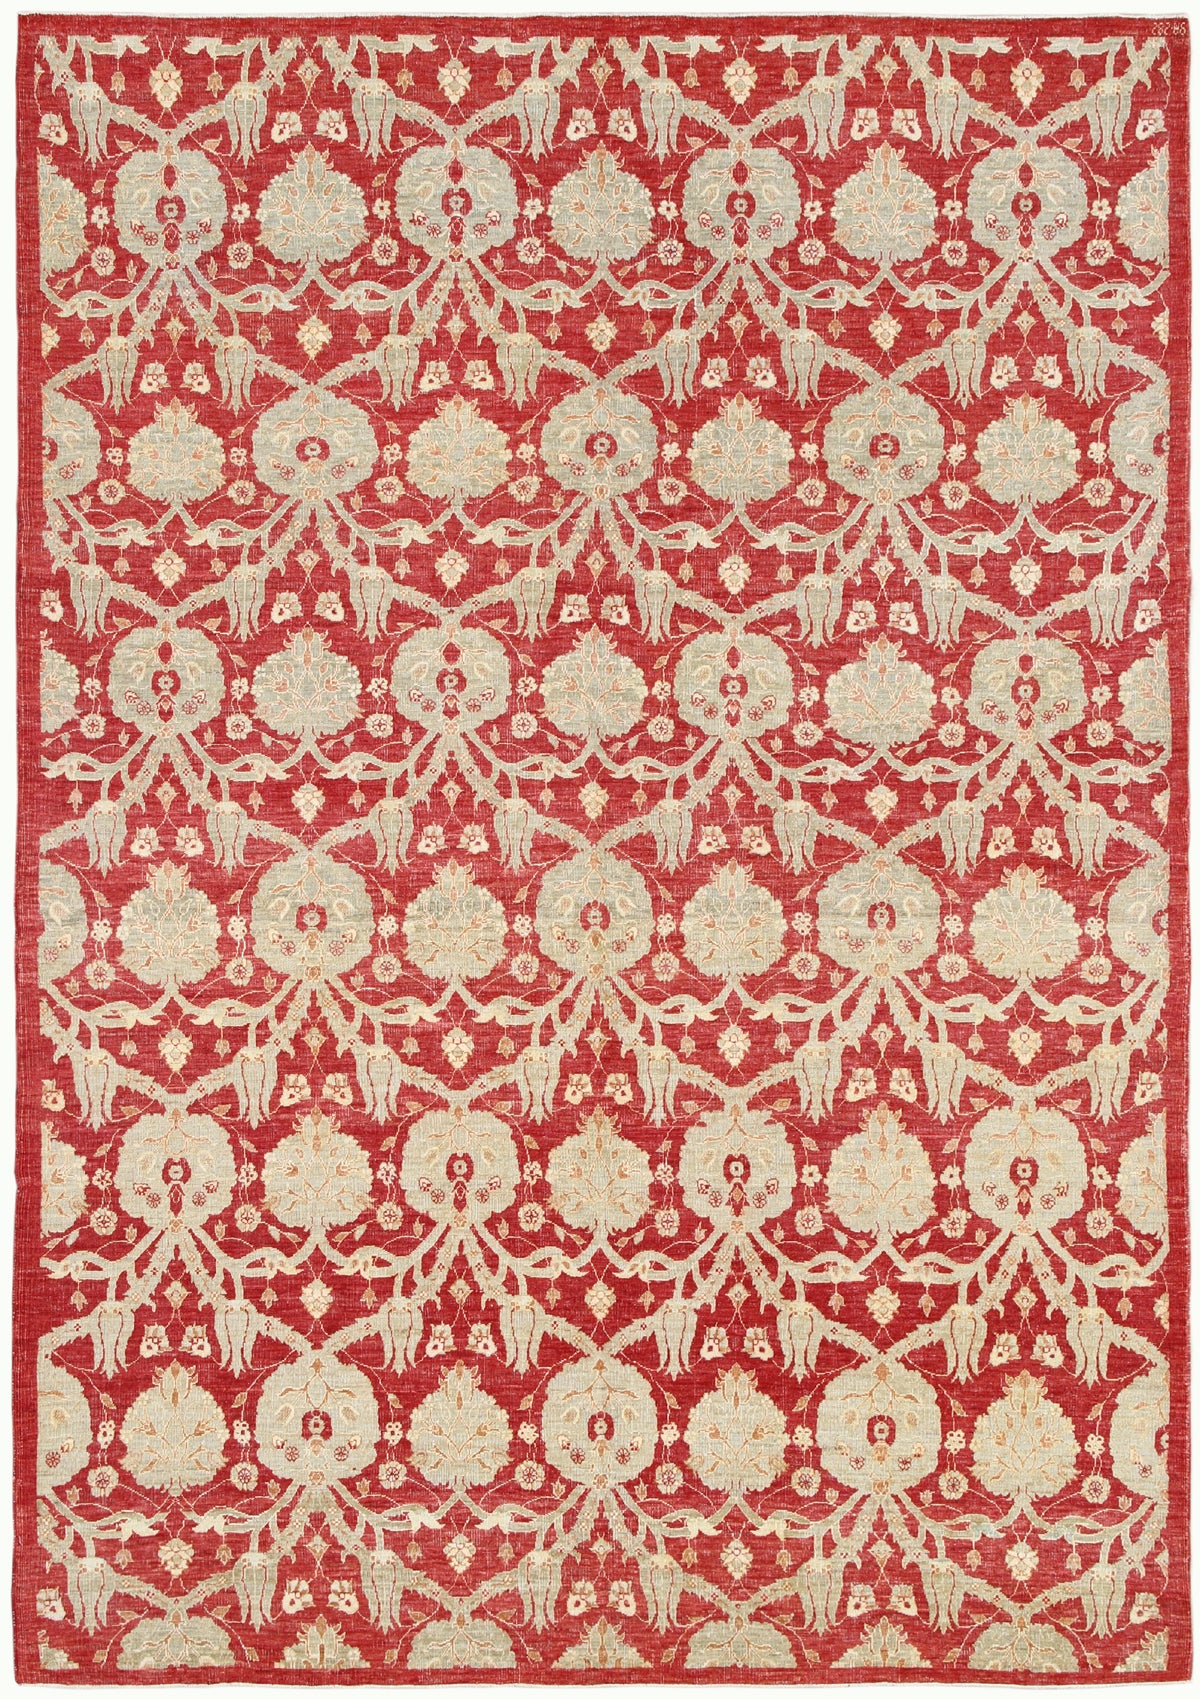 9'x6' Ariana Transitional Red Pastel Cream Ottoman Design Rug